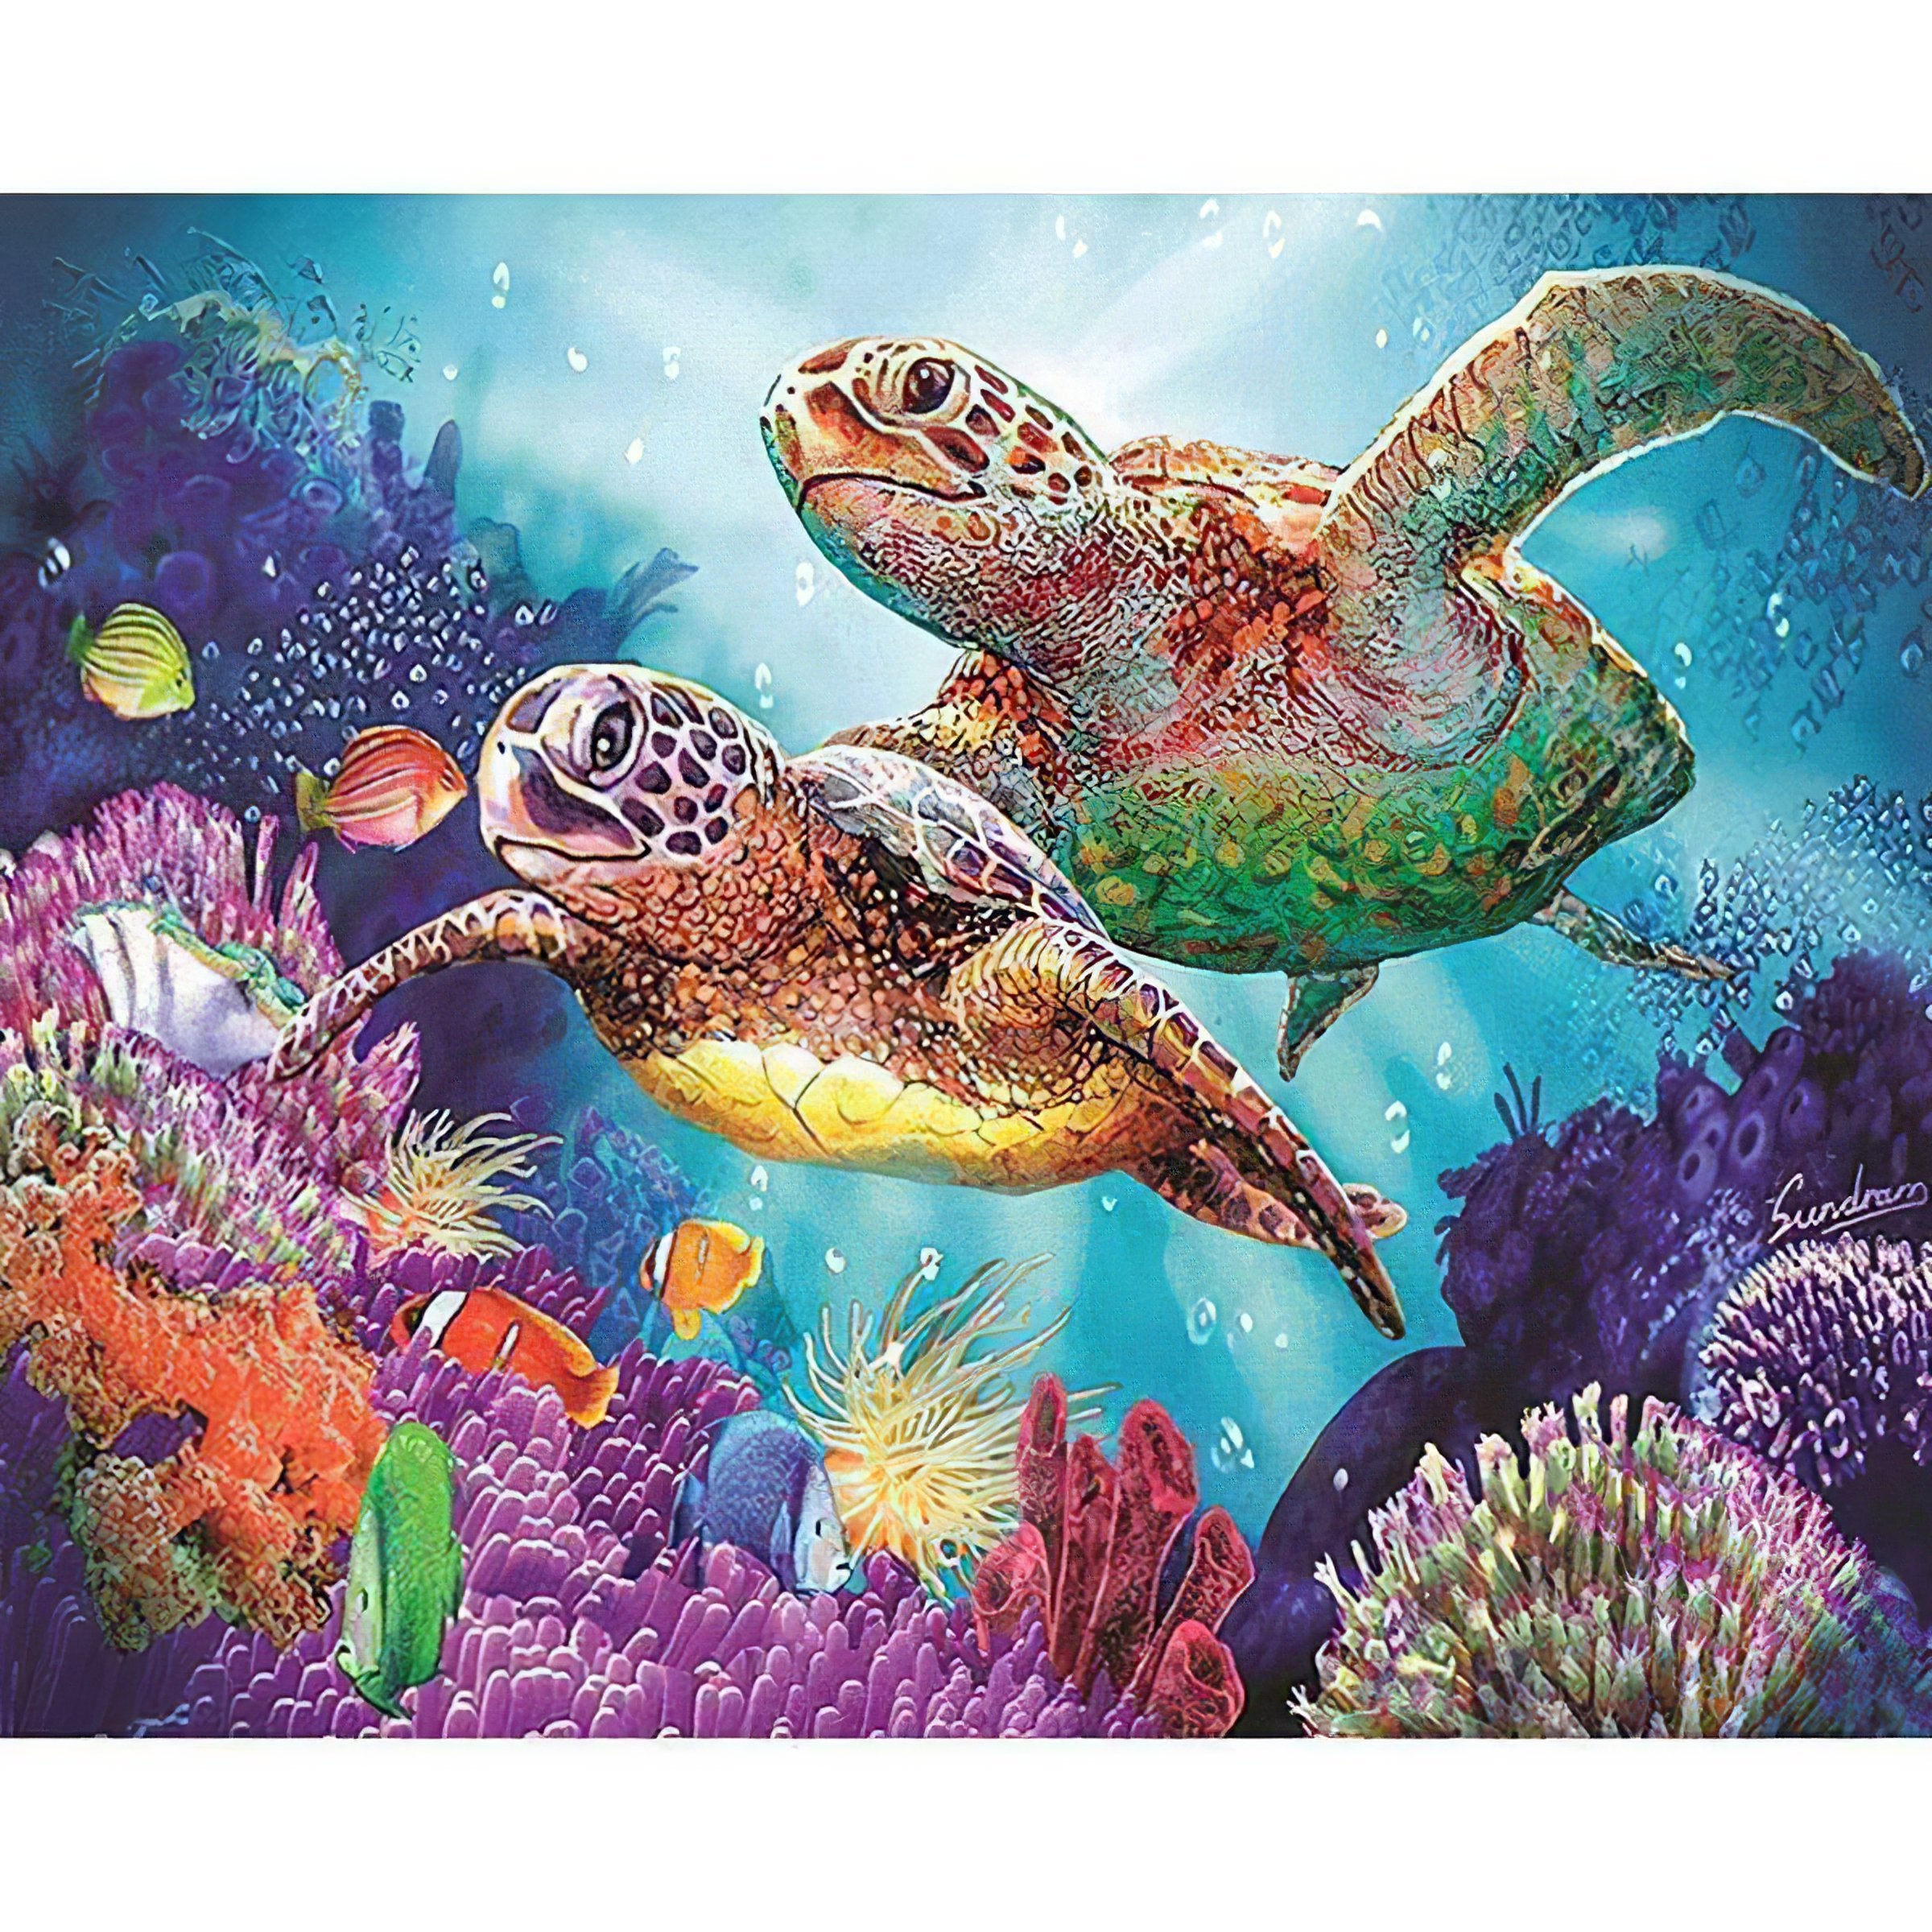 Two Tortoise In The Ocean